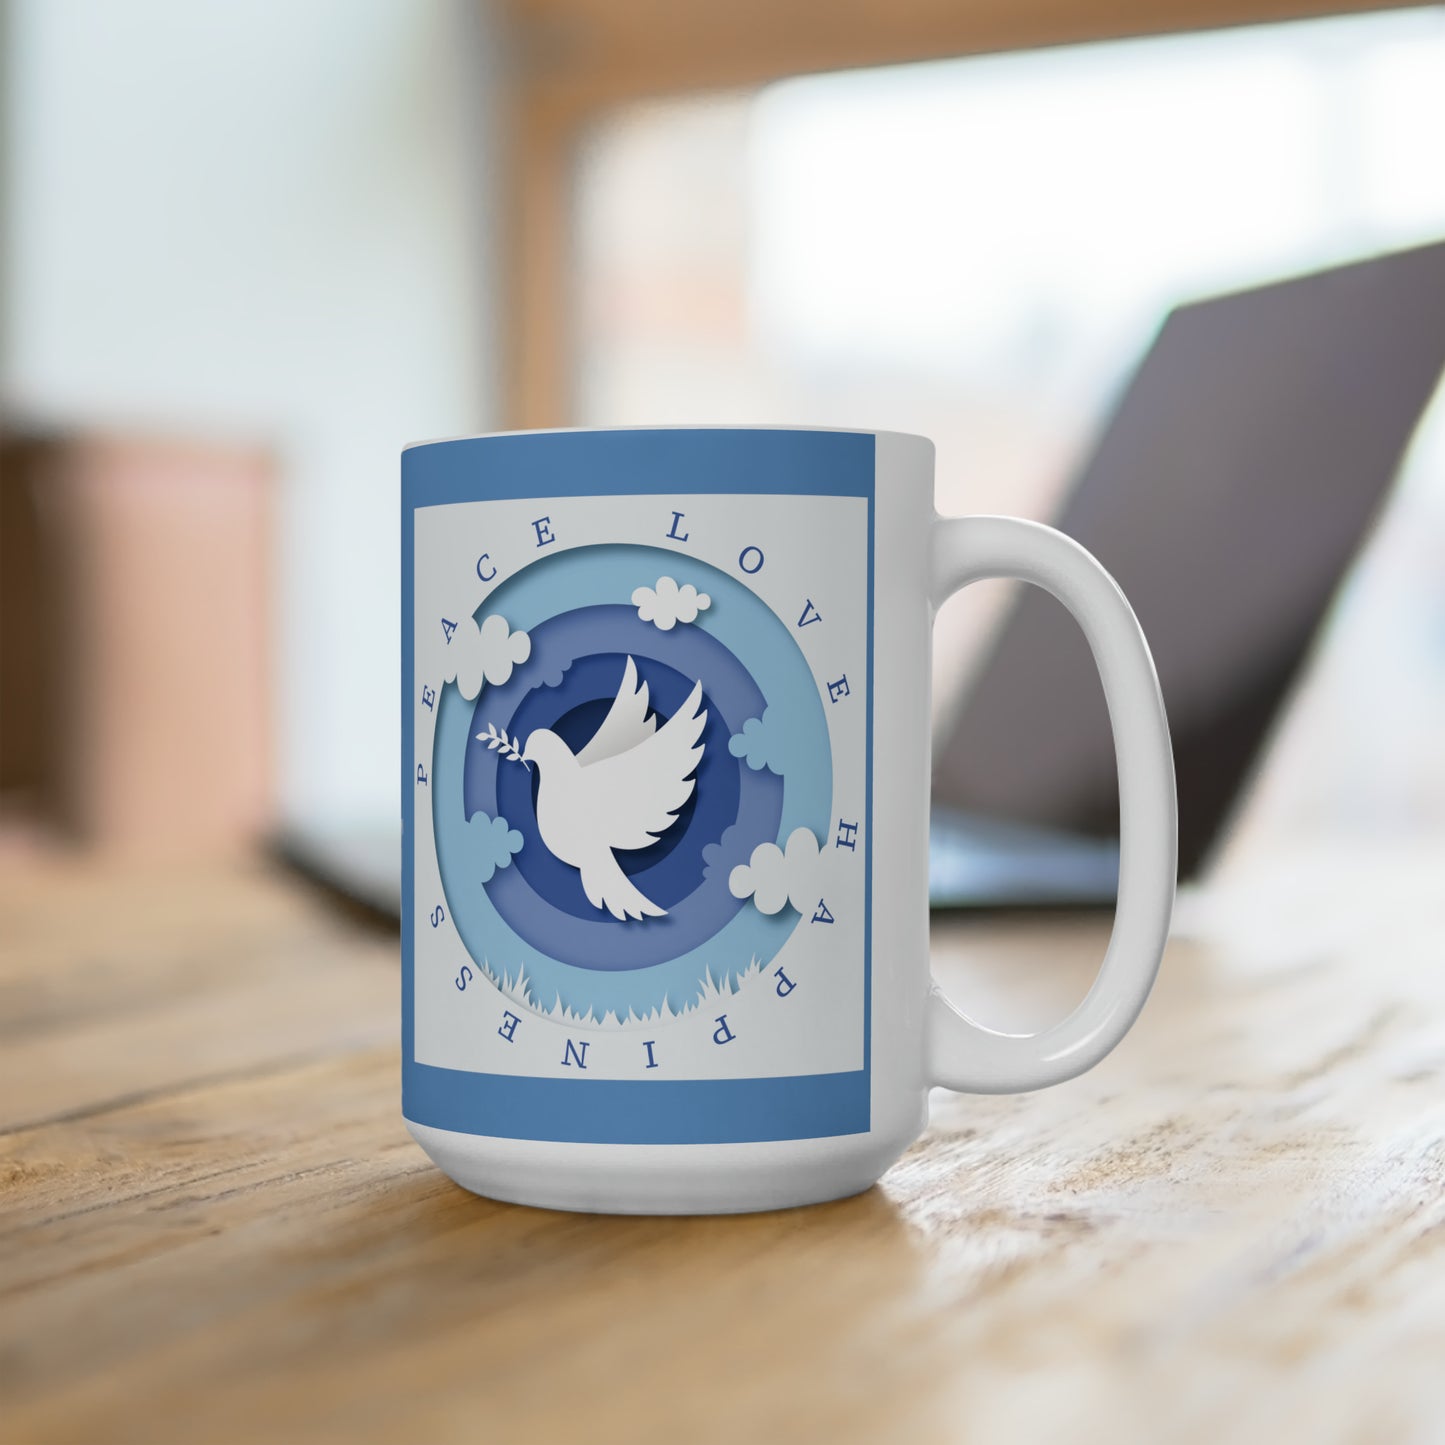 Peace Coffee Mug For Love And Happiness Hot Tea Cup